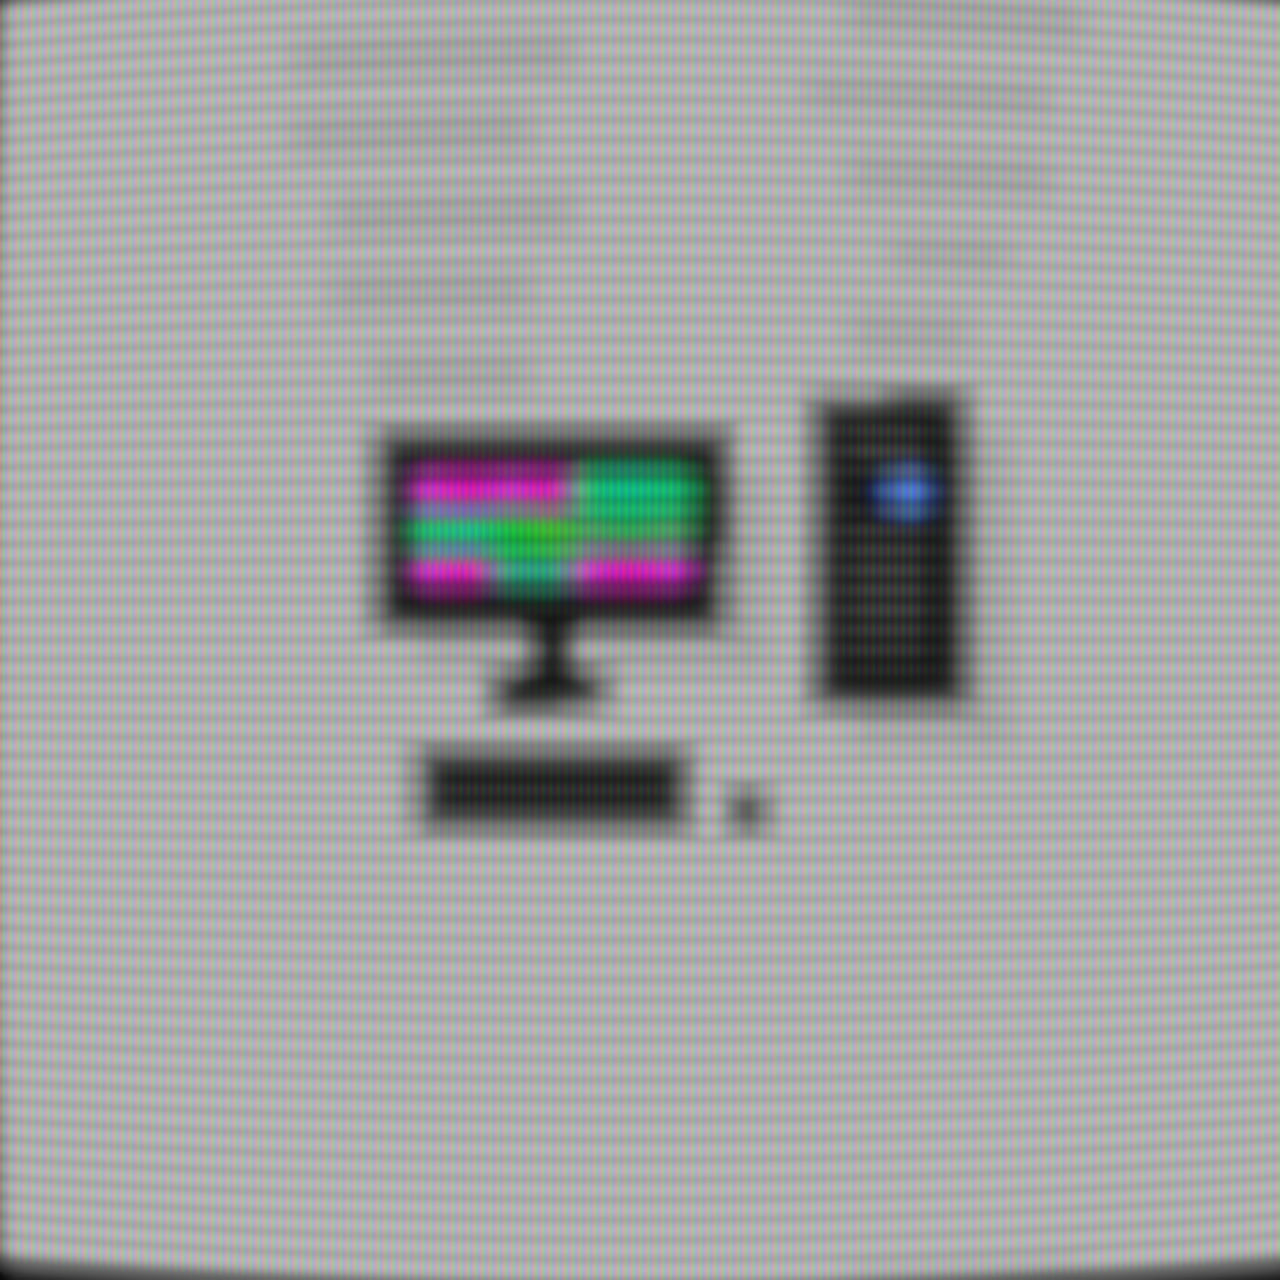 A glitchy broken pixel art computer monitor